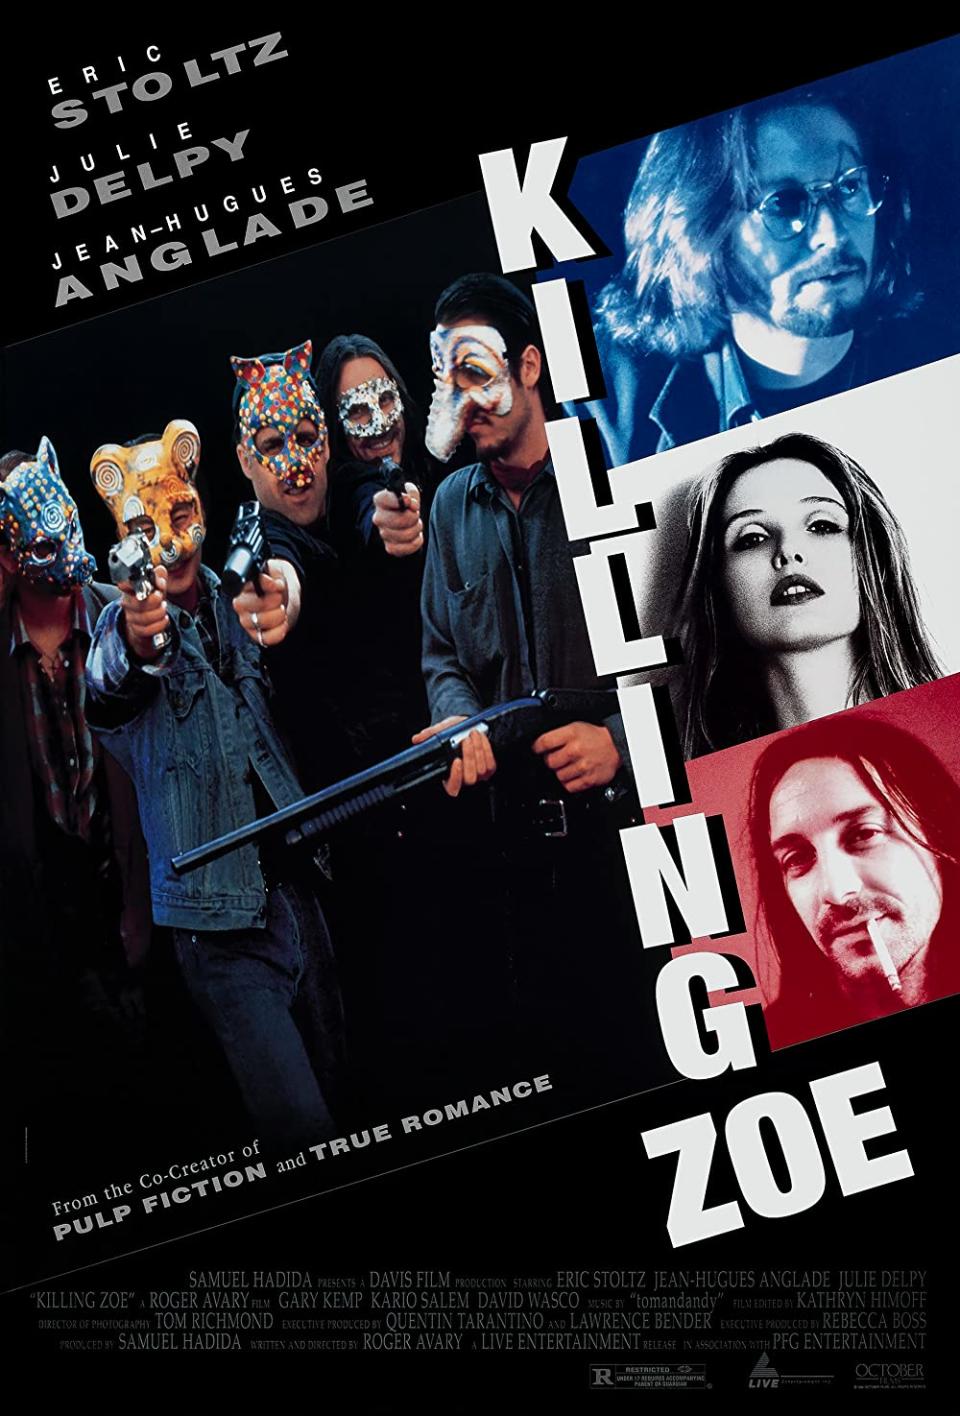 The movie poster for "Killing Zoe" (1993).